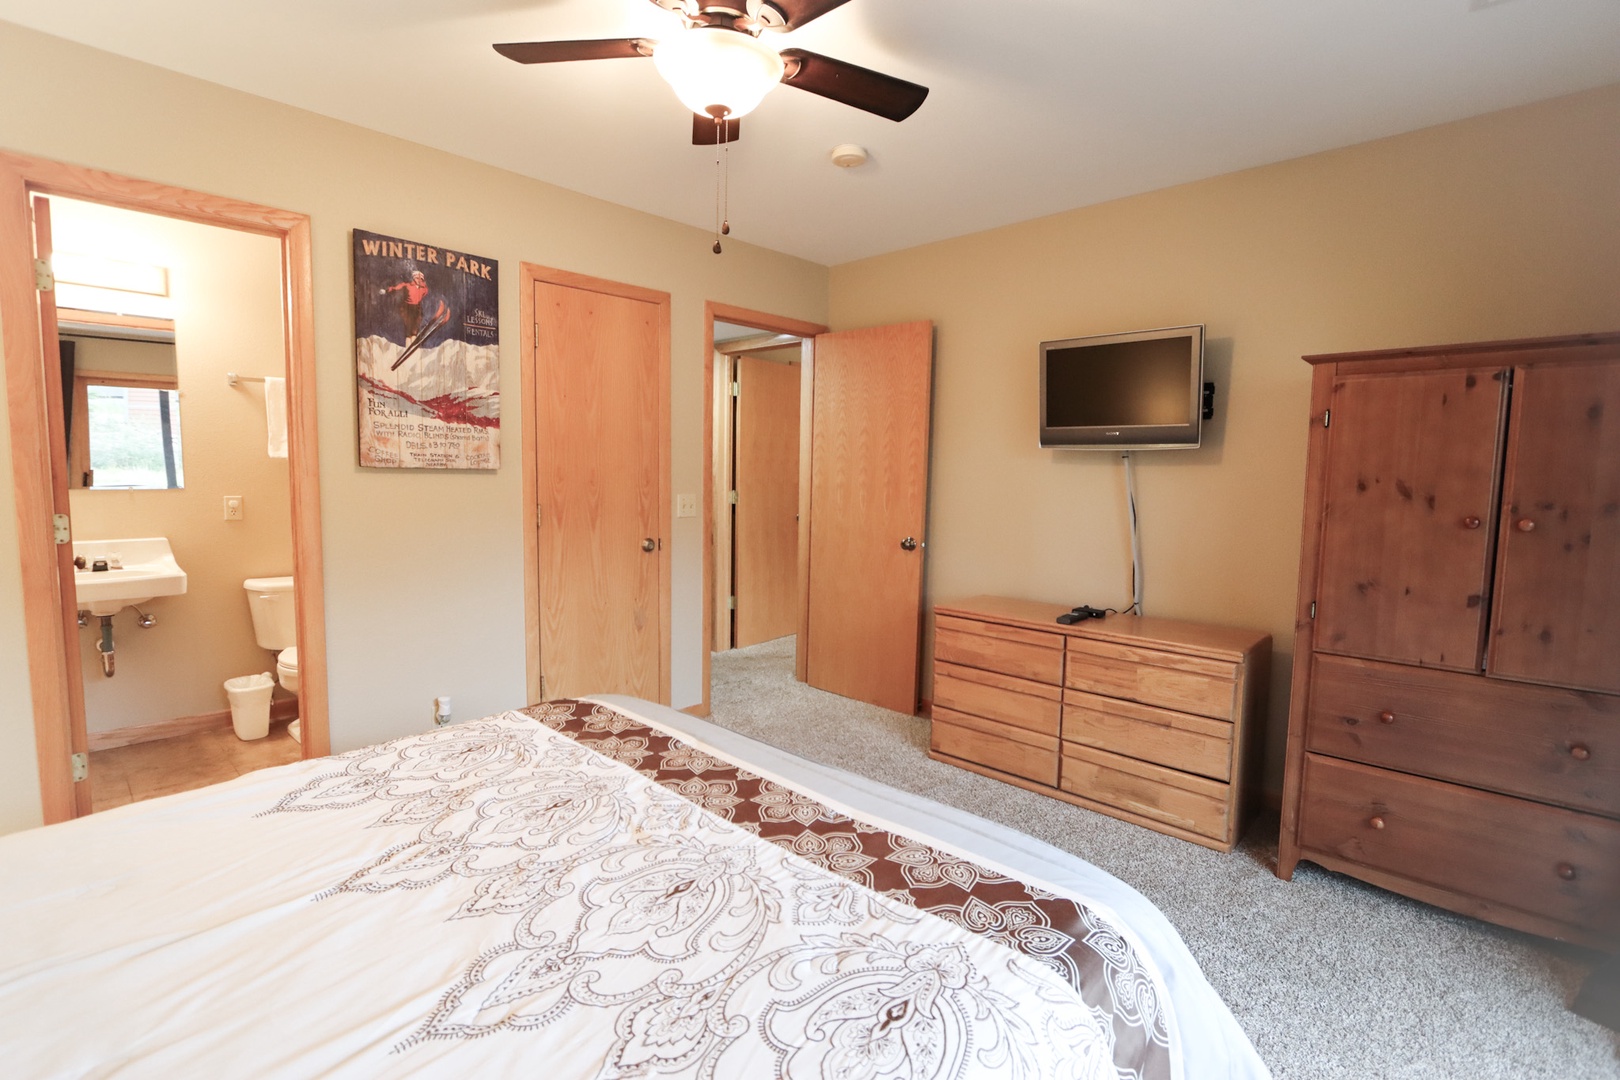 The queen suite offers a private en suite, TV, ceiling fan, & balcony access